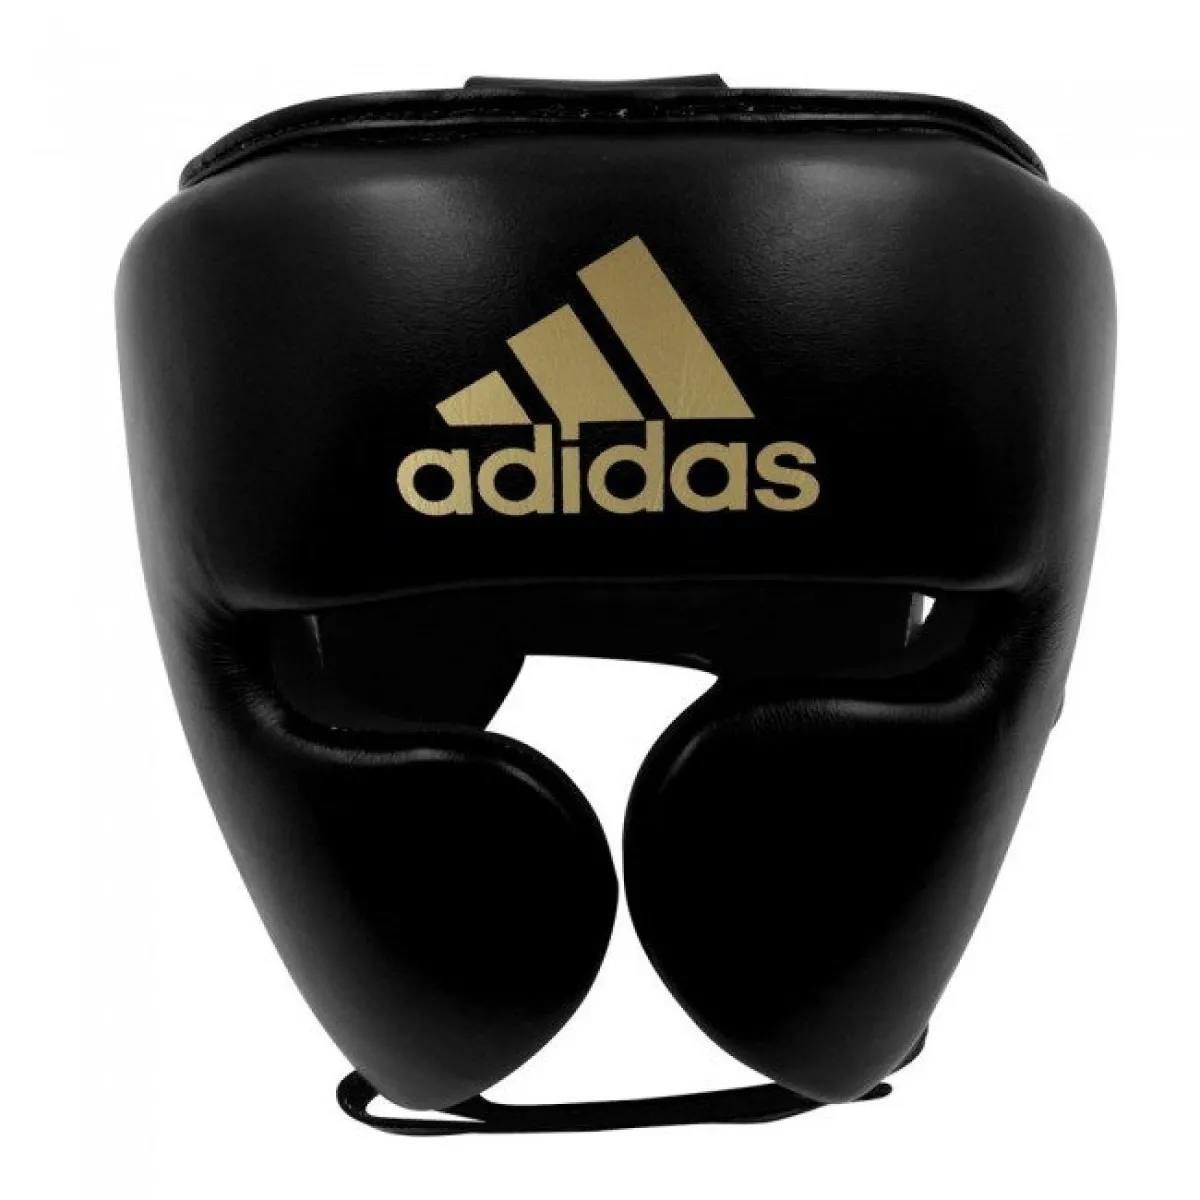 adidas head protection adistar Pro black|gold